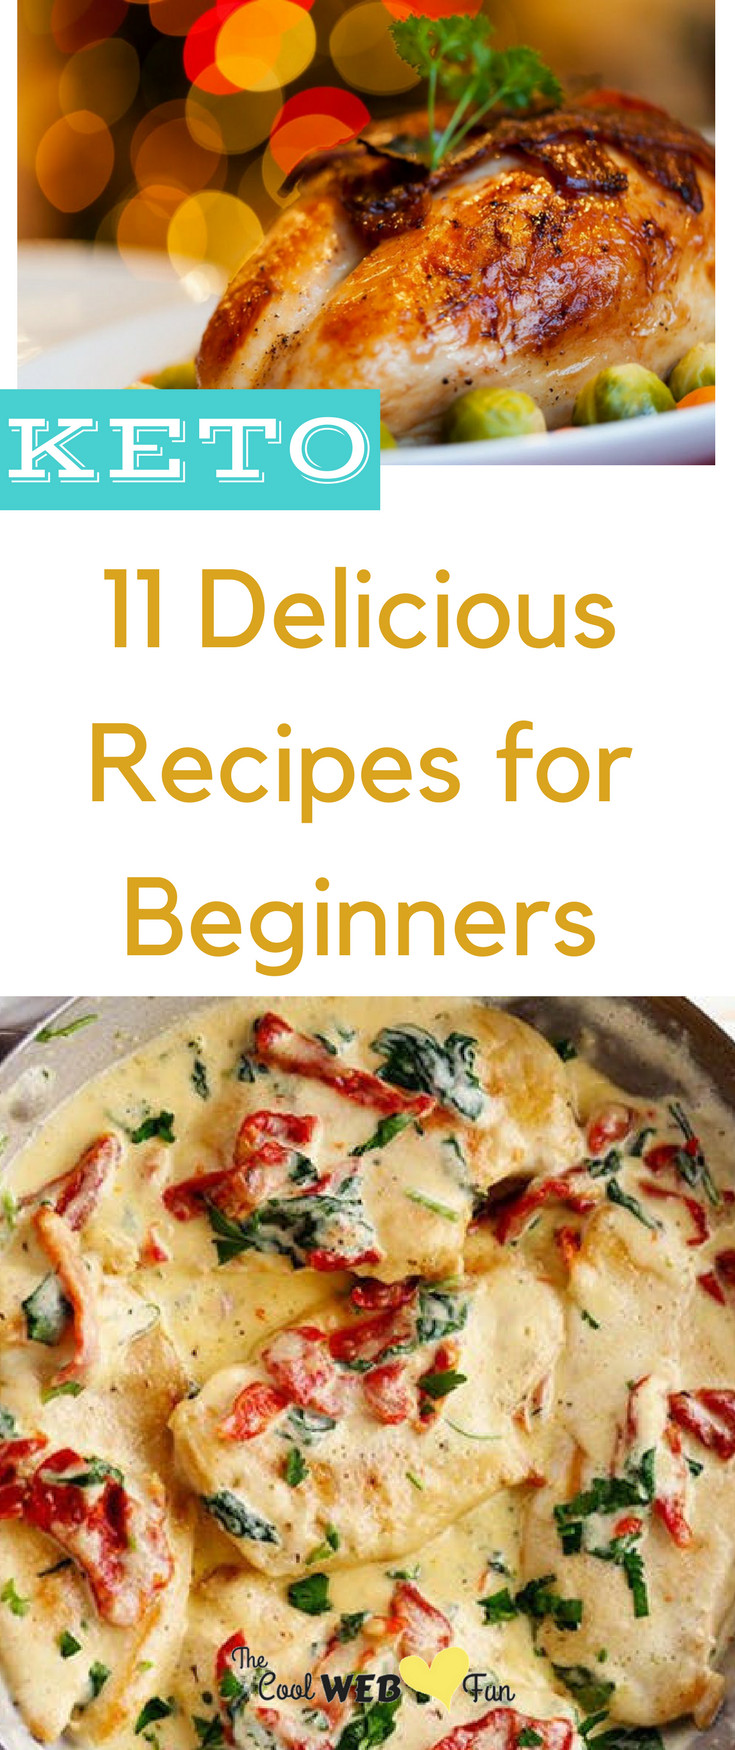 Keto Diet For Beginners Recipe
 11 Keto Recipes for Beginners Fitness Bash